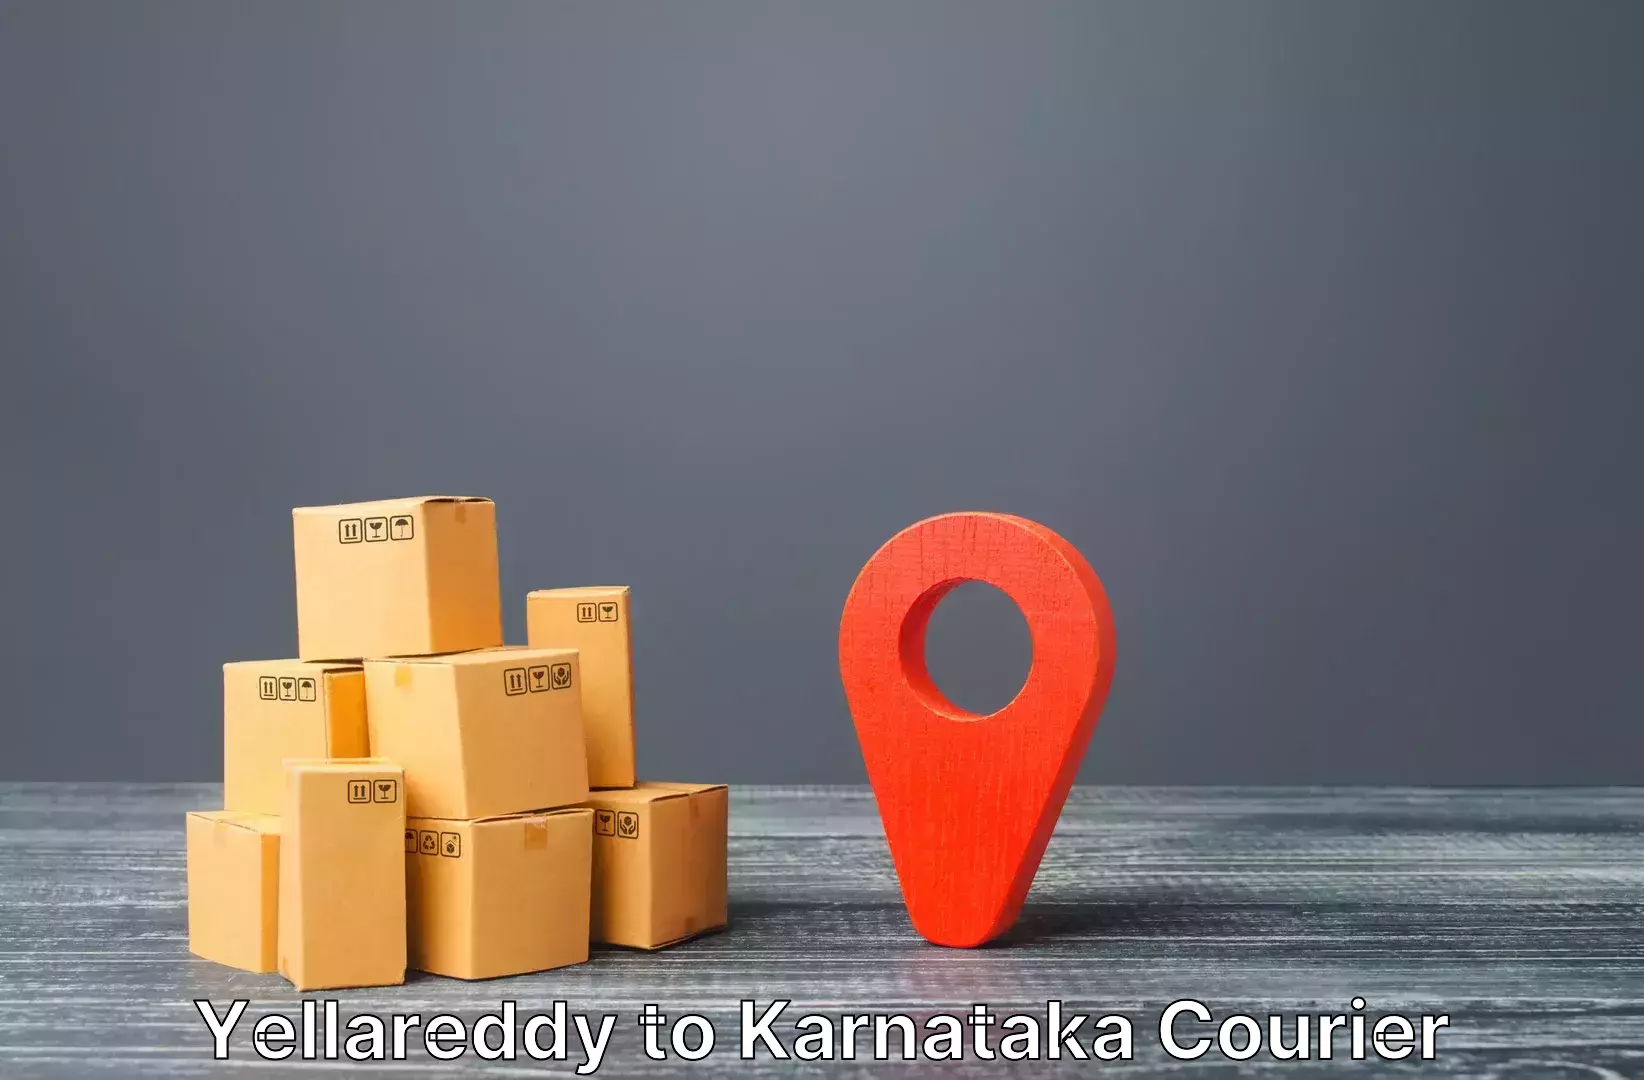 Online luggage shipping in Yellareddy to Karnataka